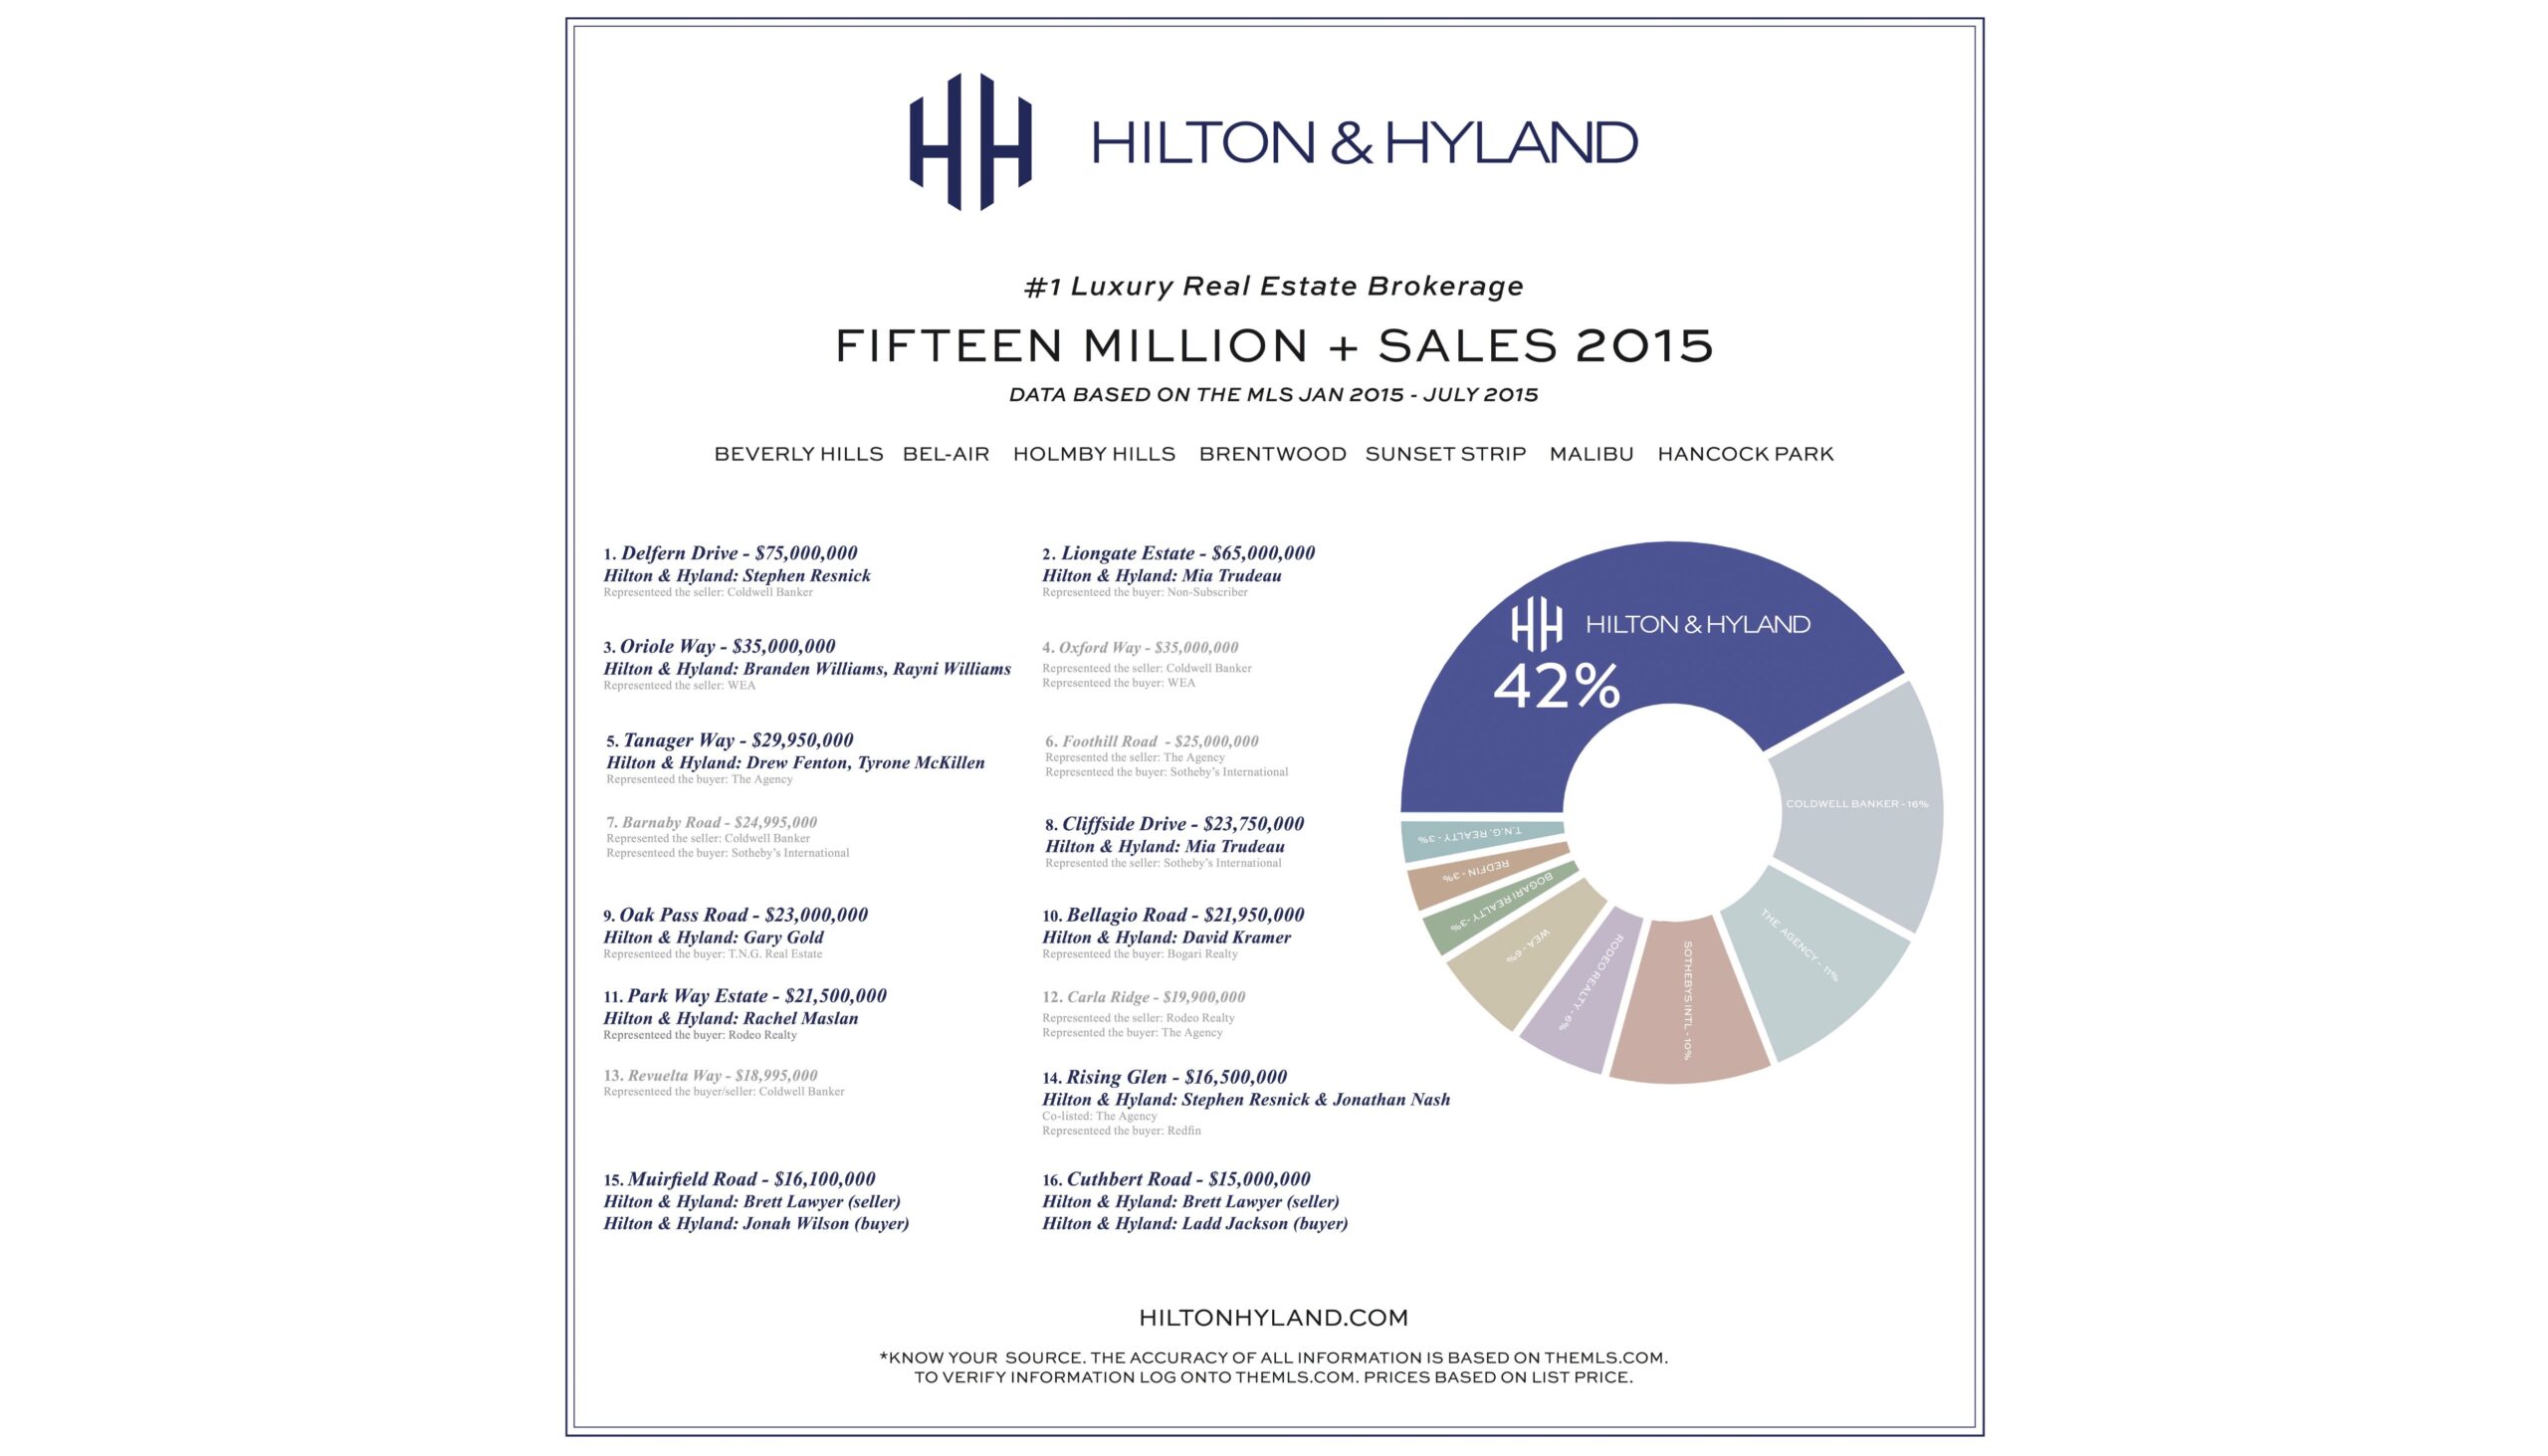 LA Times Highlights Hilton & Hyland’s 15 Million+ Sales in 2015